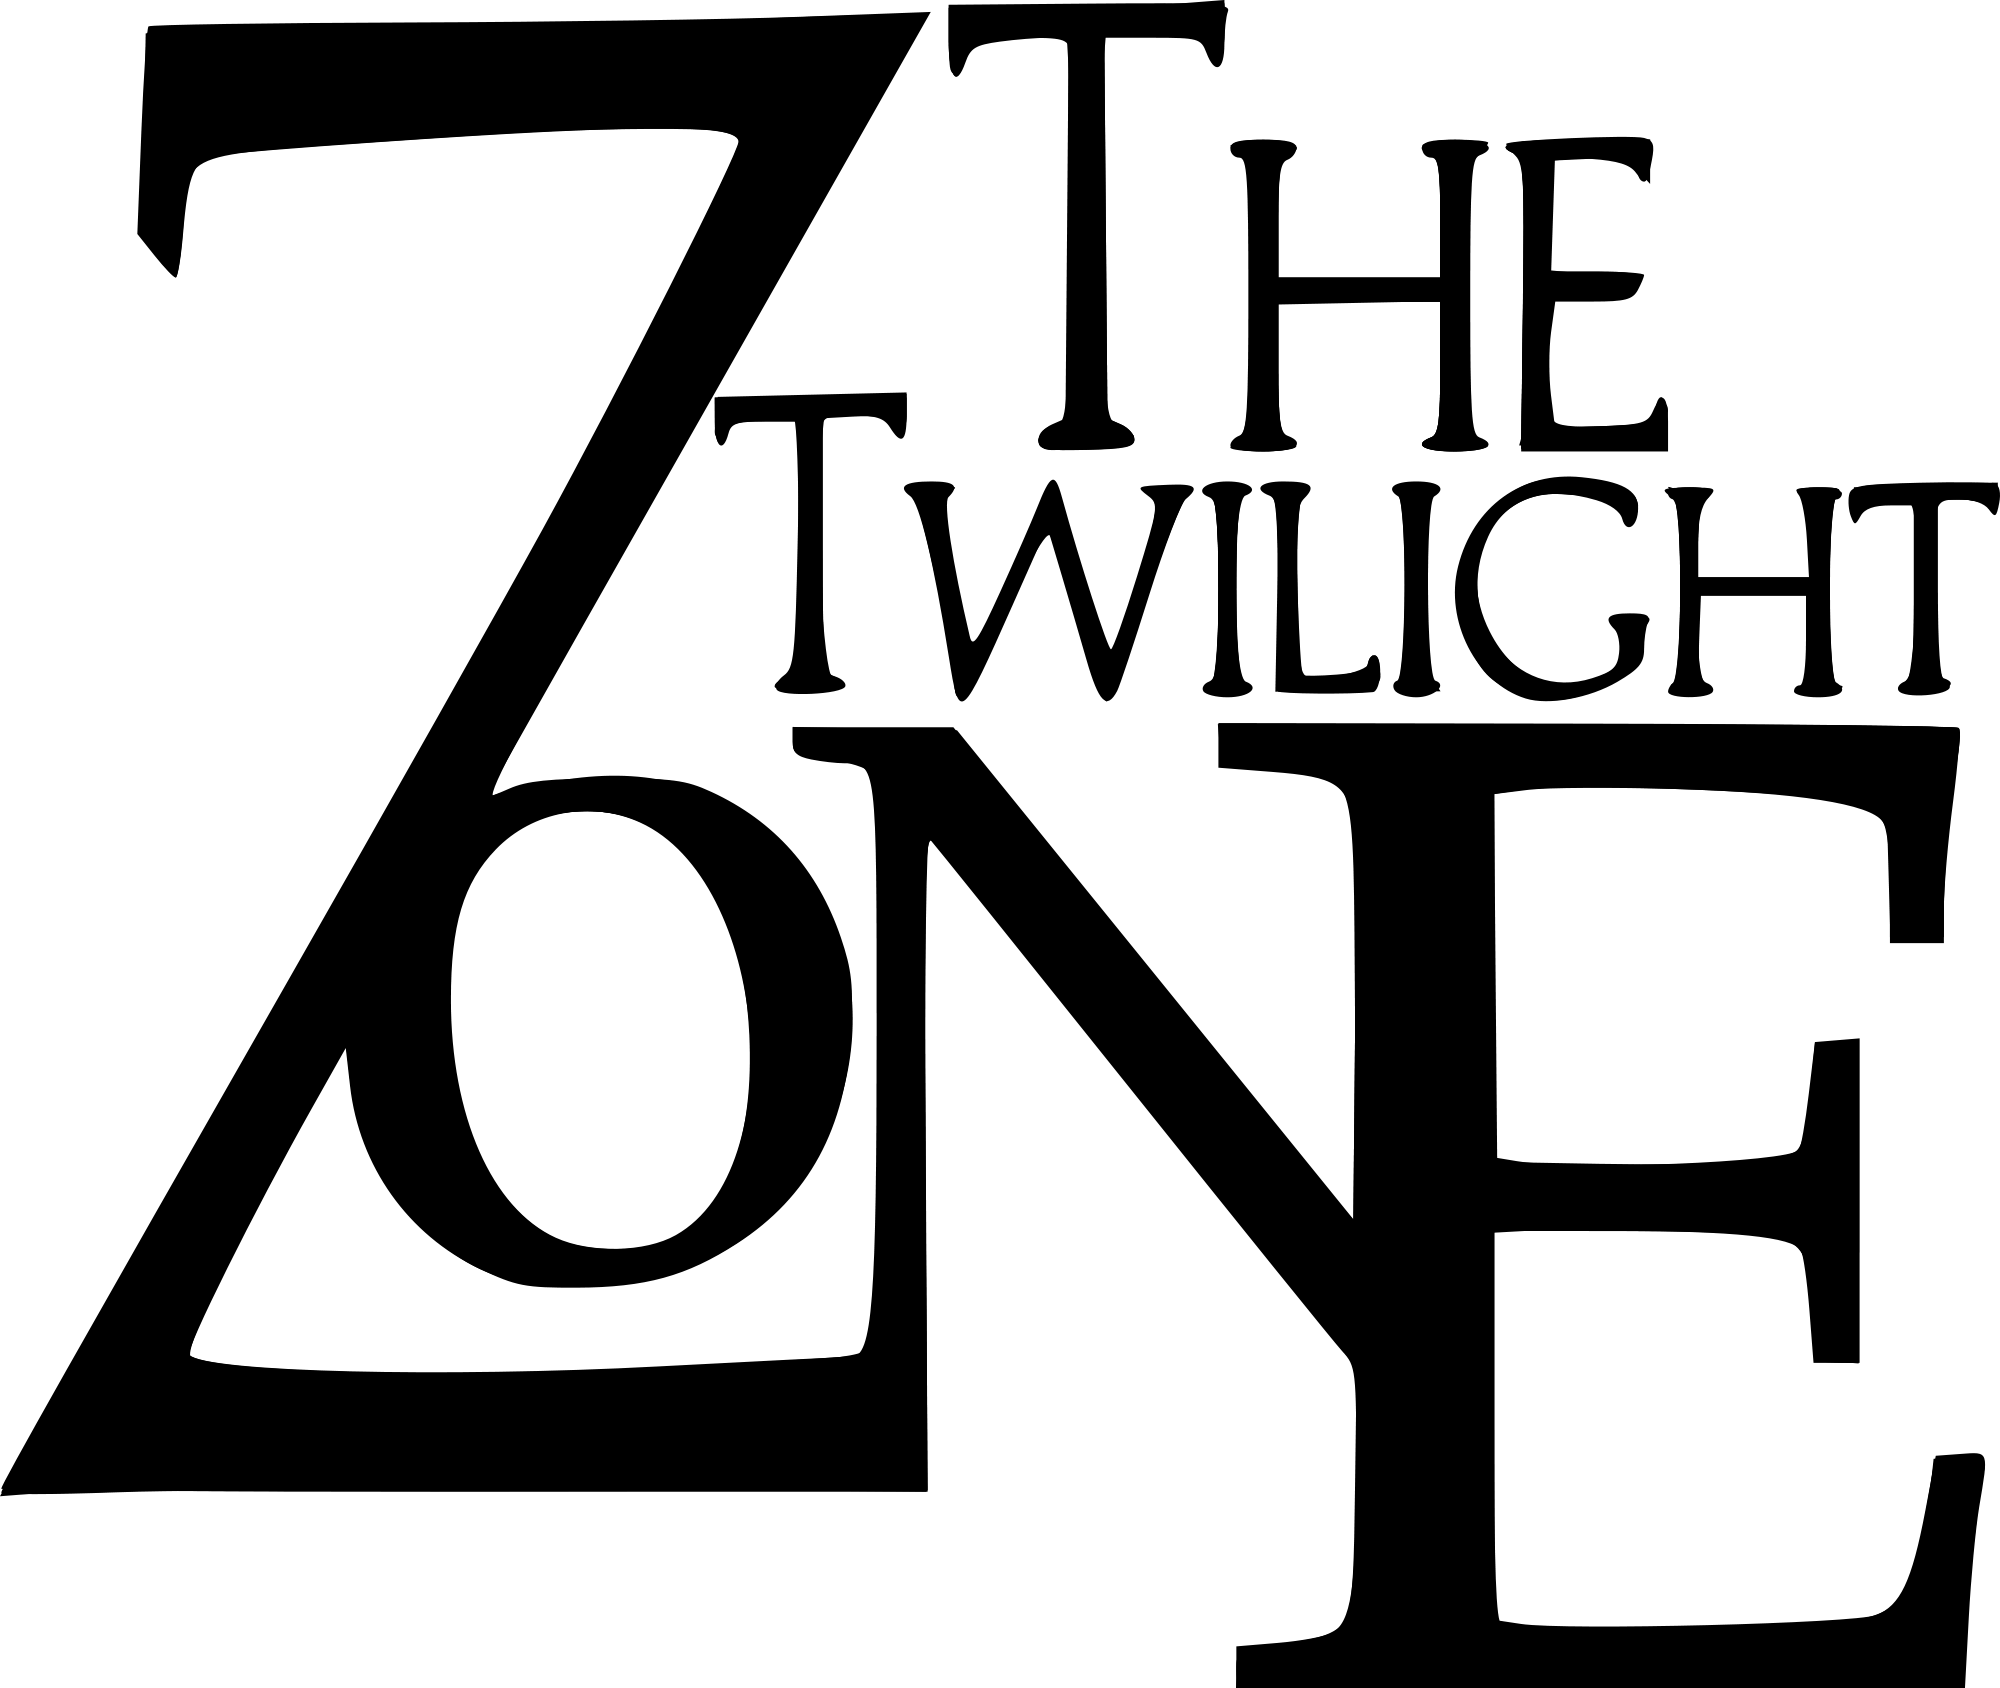 Twlight Logo - File:The Twilight Zone 2002 logo.svg - Wikimedia Commons